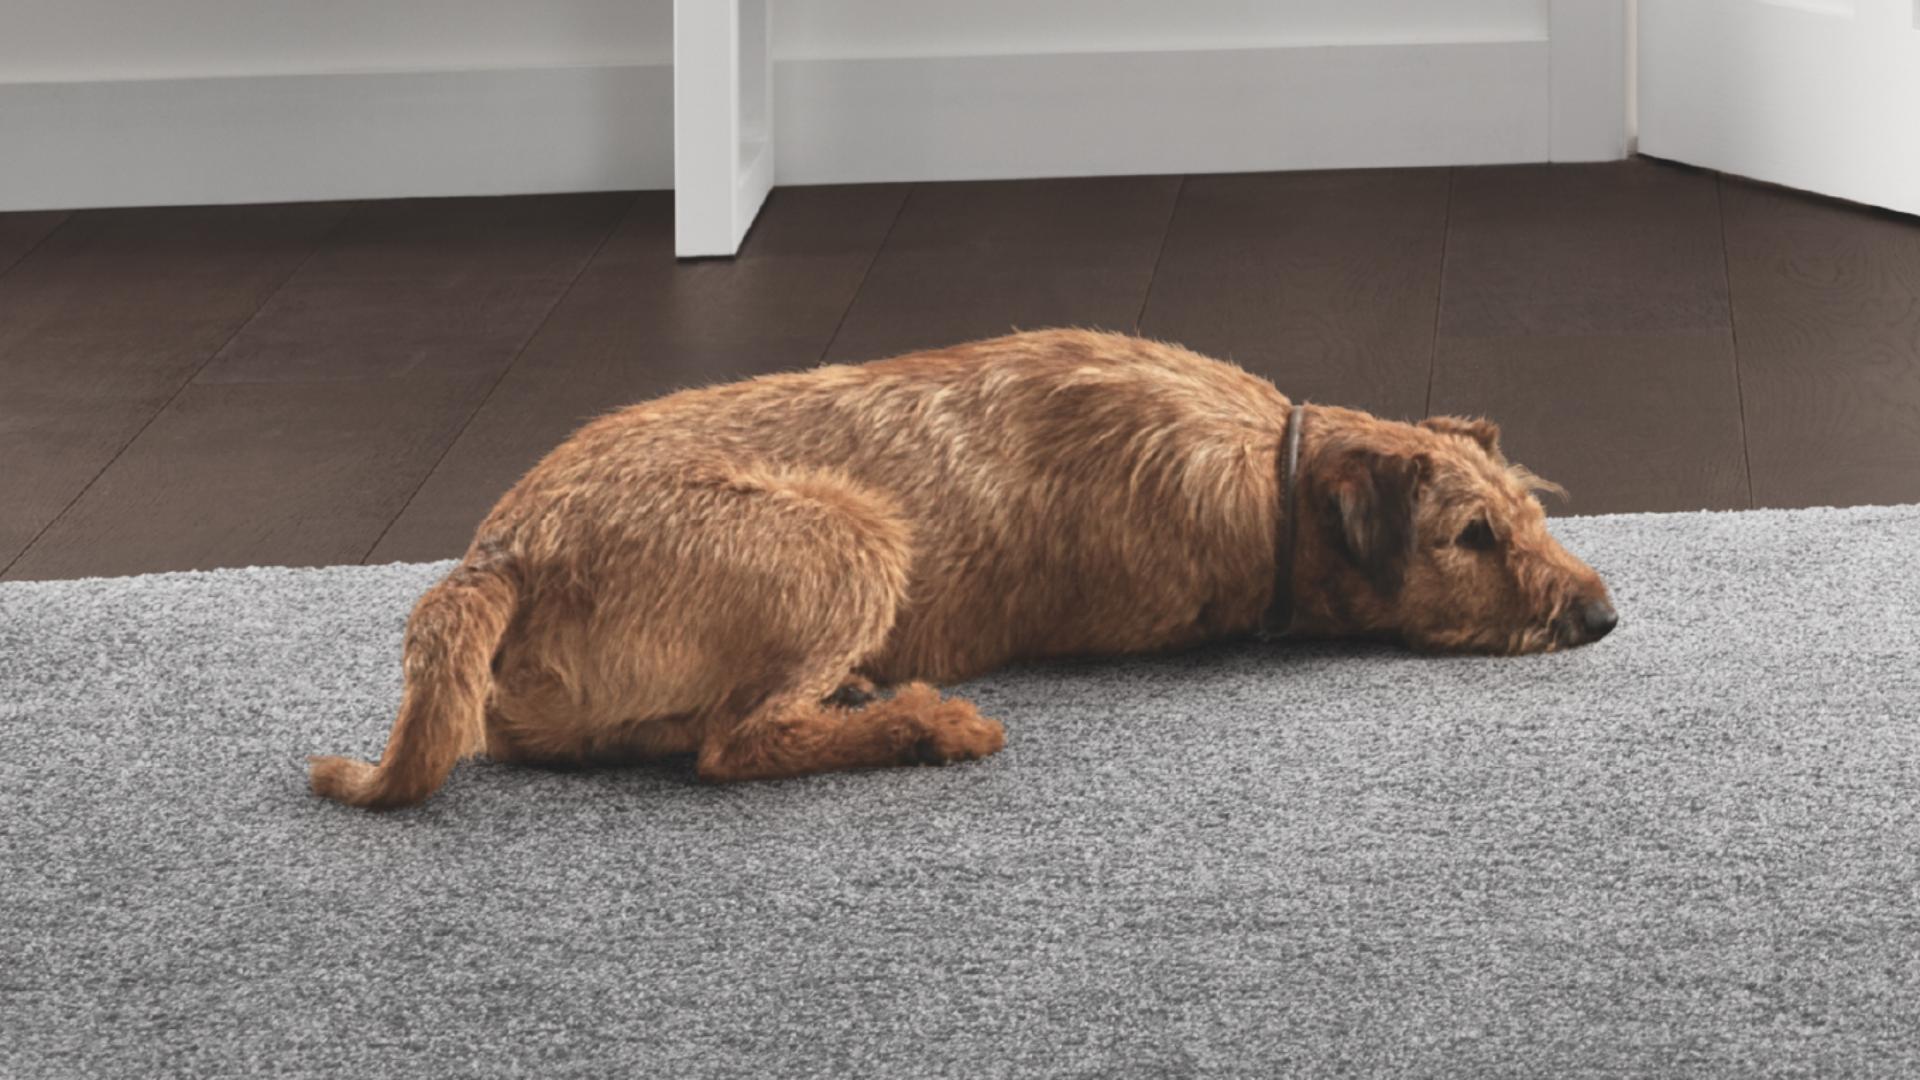 A dog resting on a carpet.